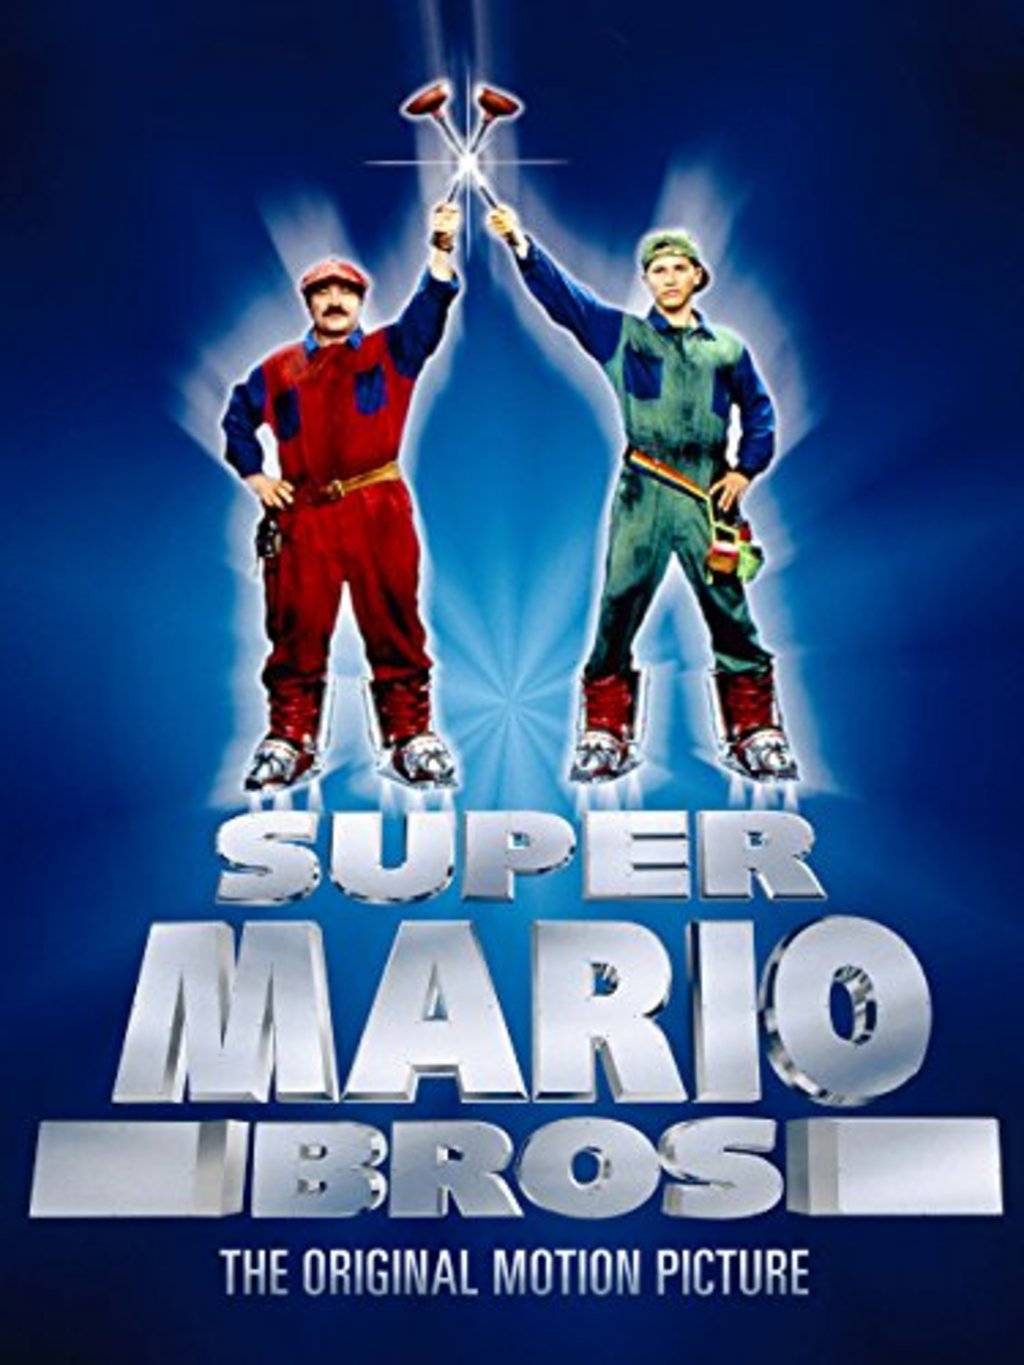 Watch Super Mario Bros. on Netflix Today!